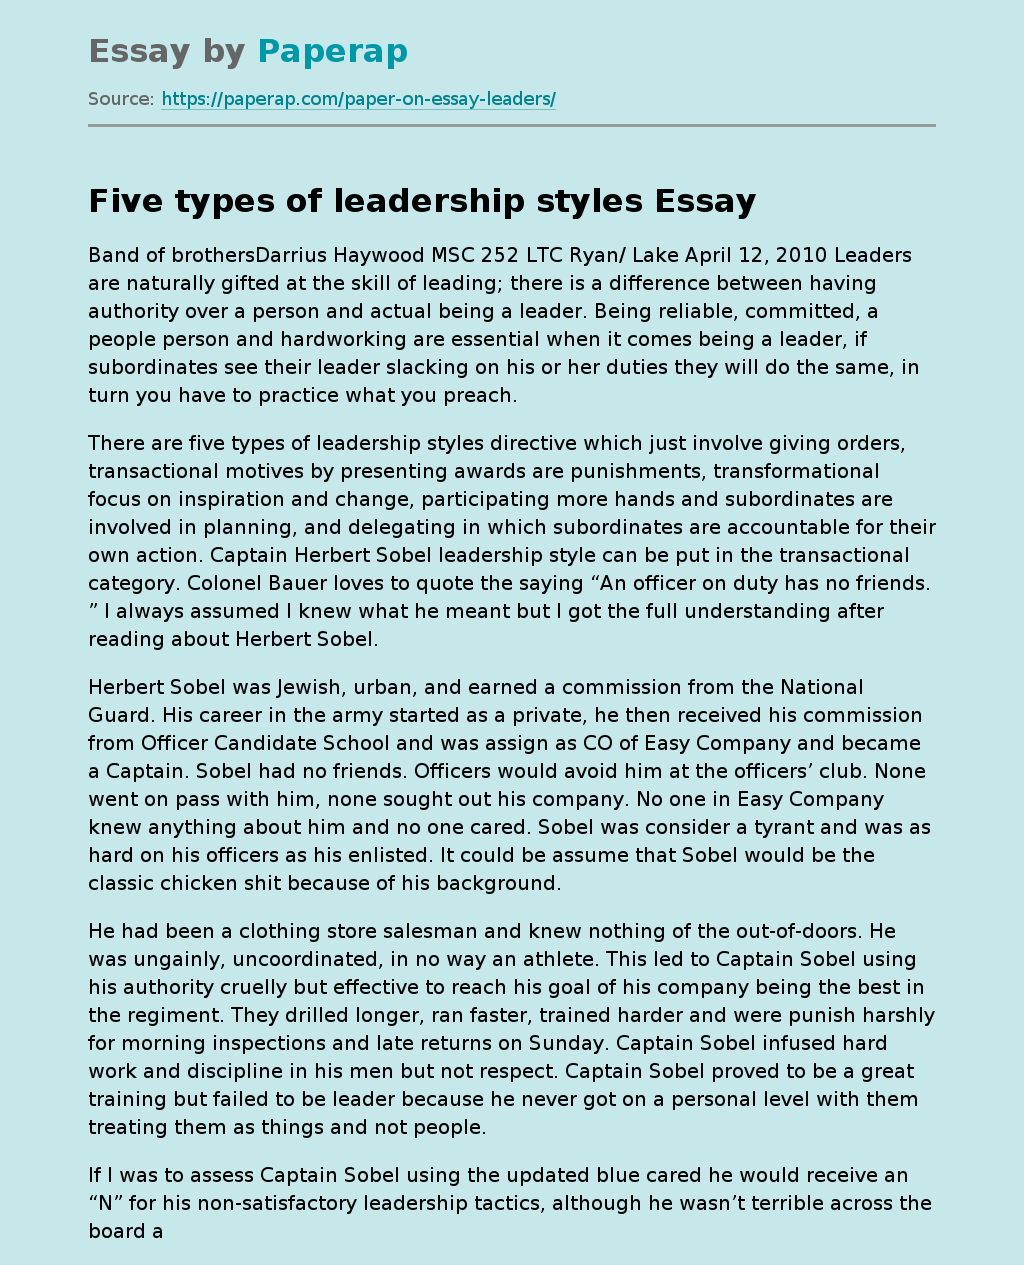 Five types of leadership styles